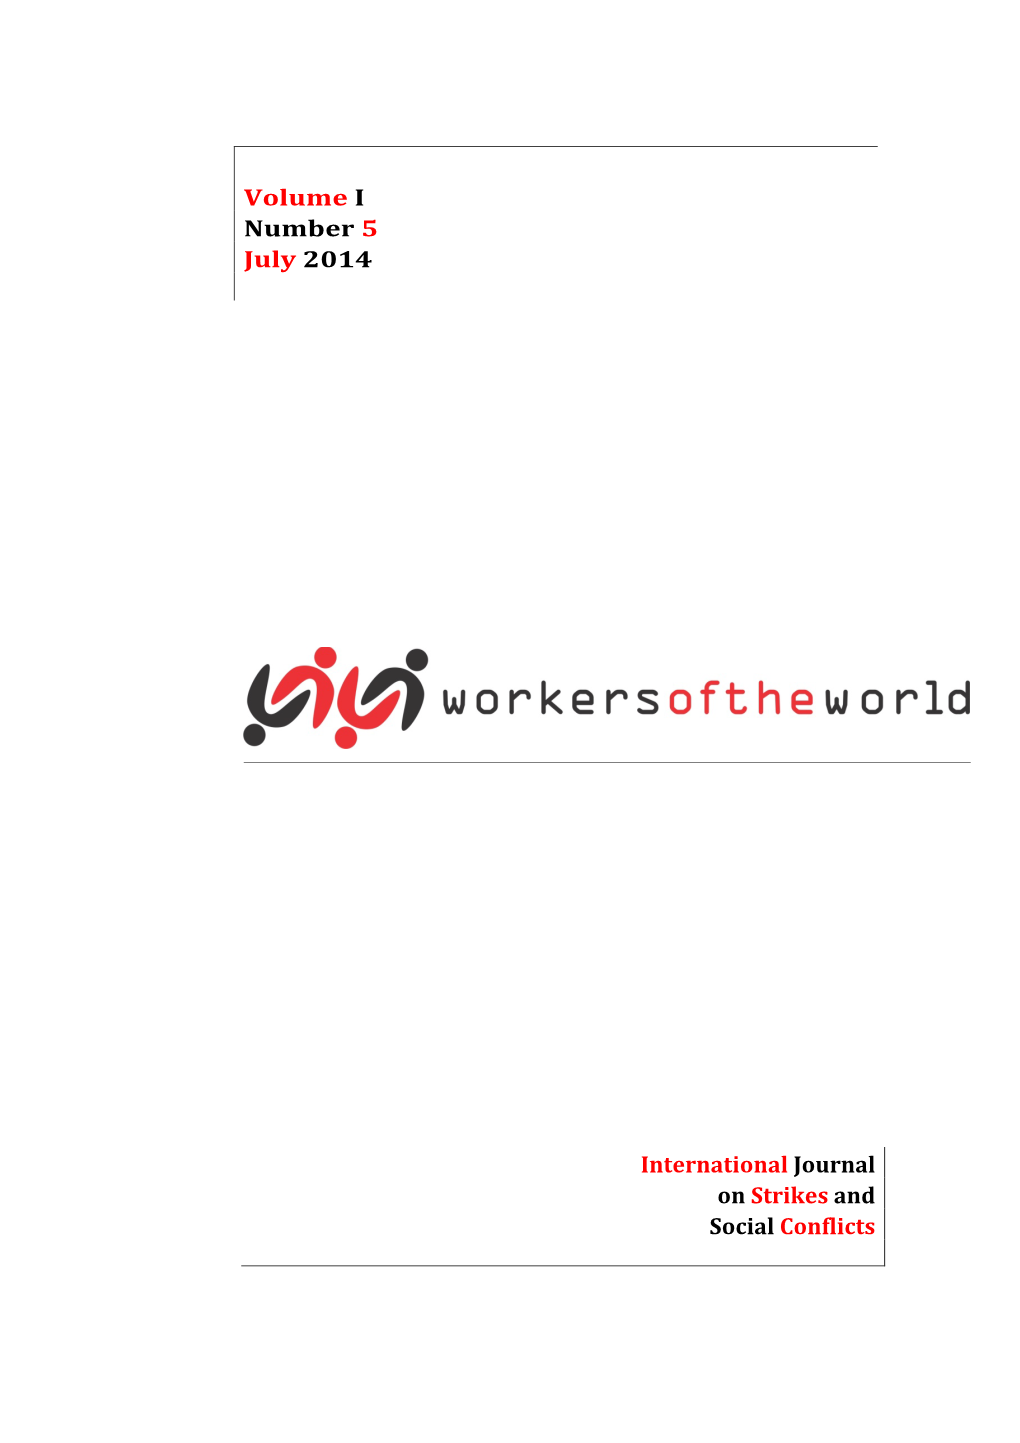 Volume I Number 5 July 2014 International Journal on Strikes And